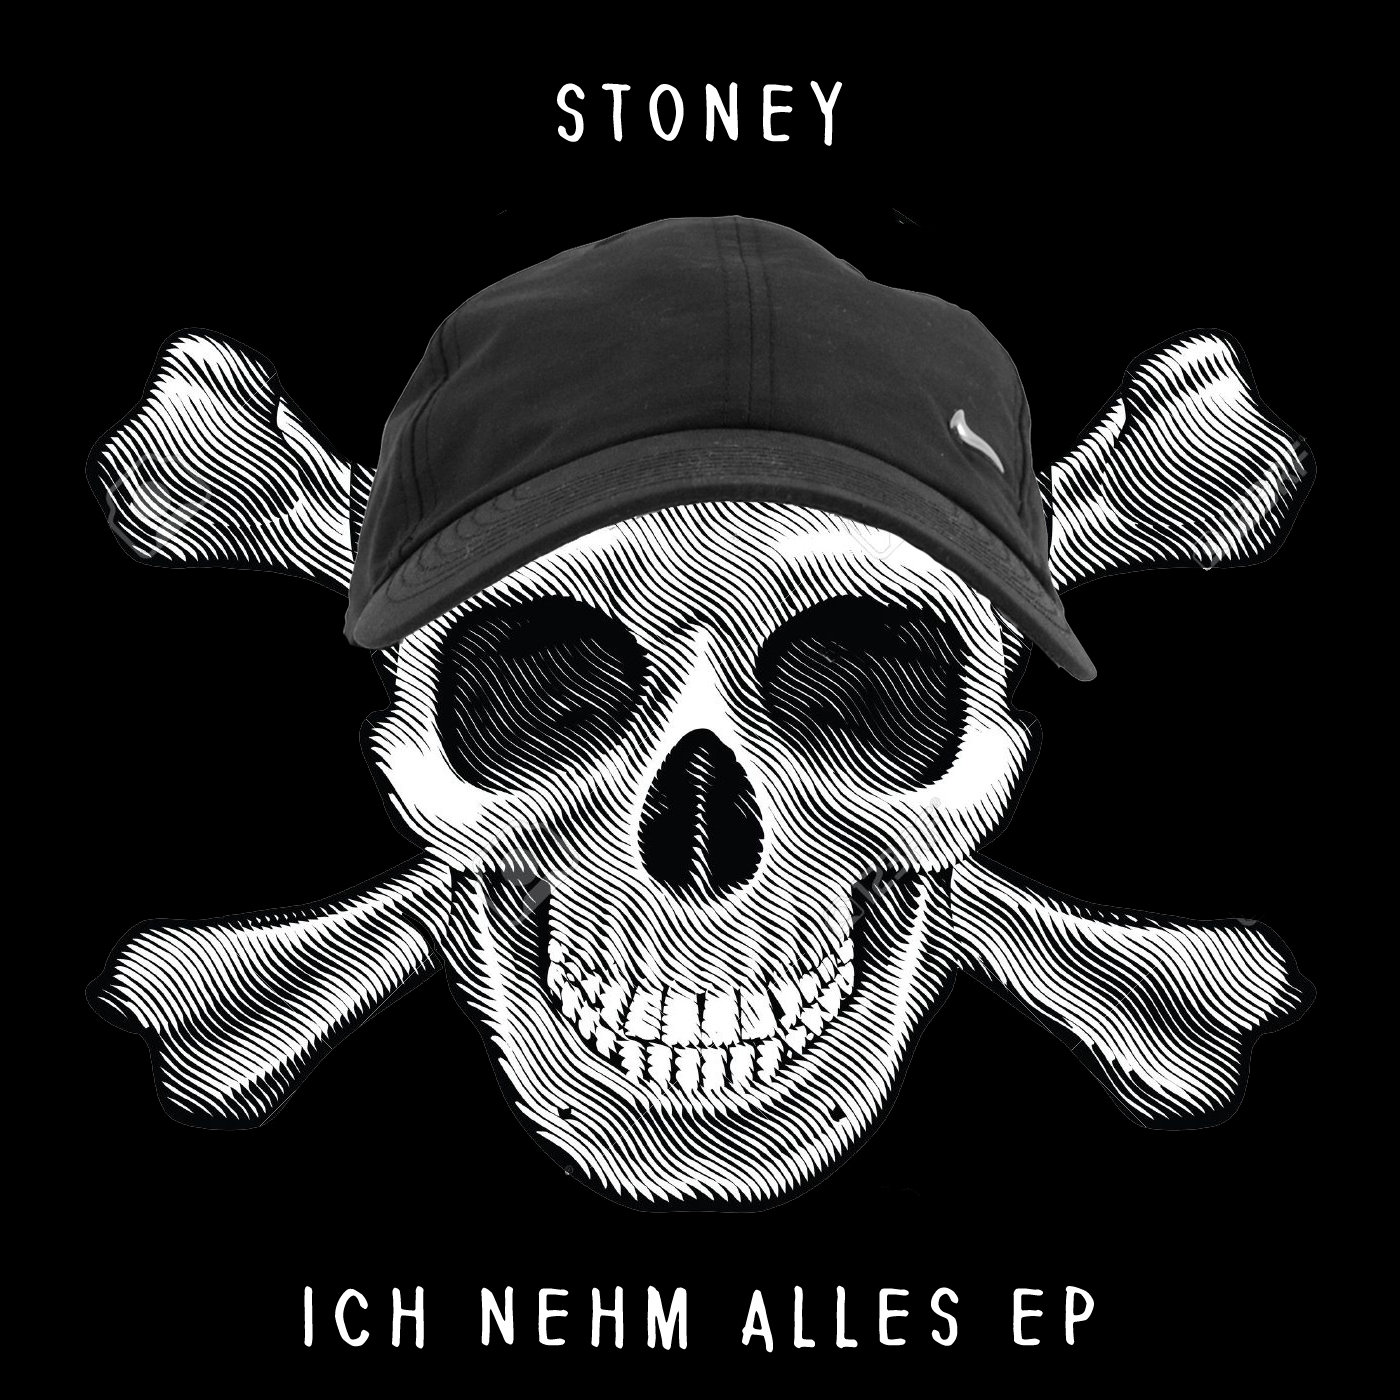 Stoney - Ich nehm alles EP